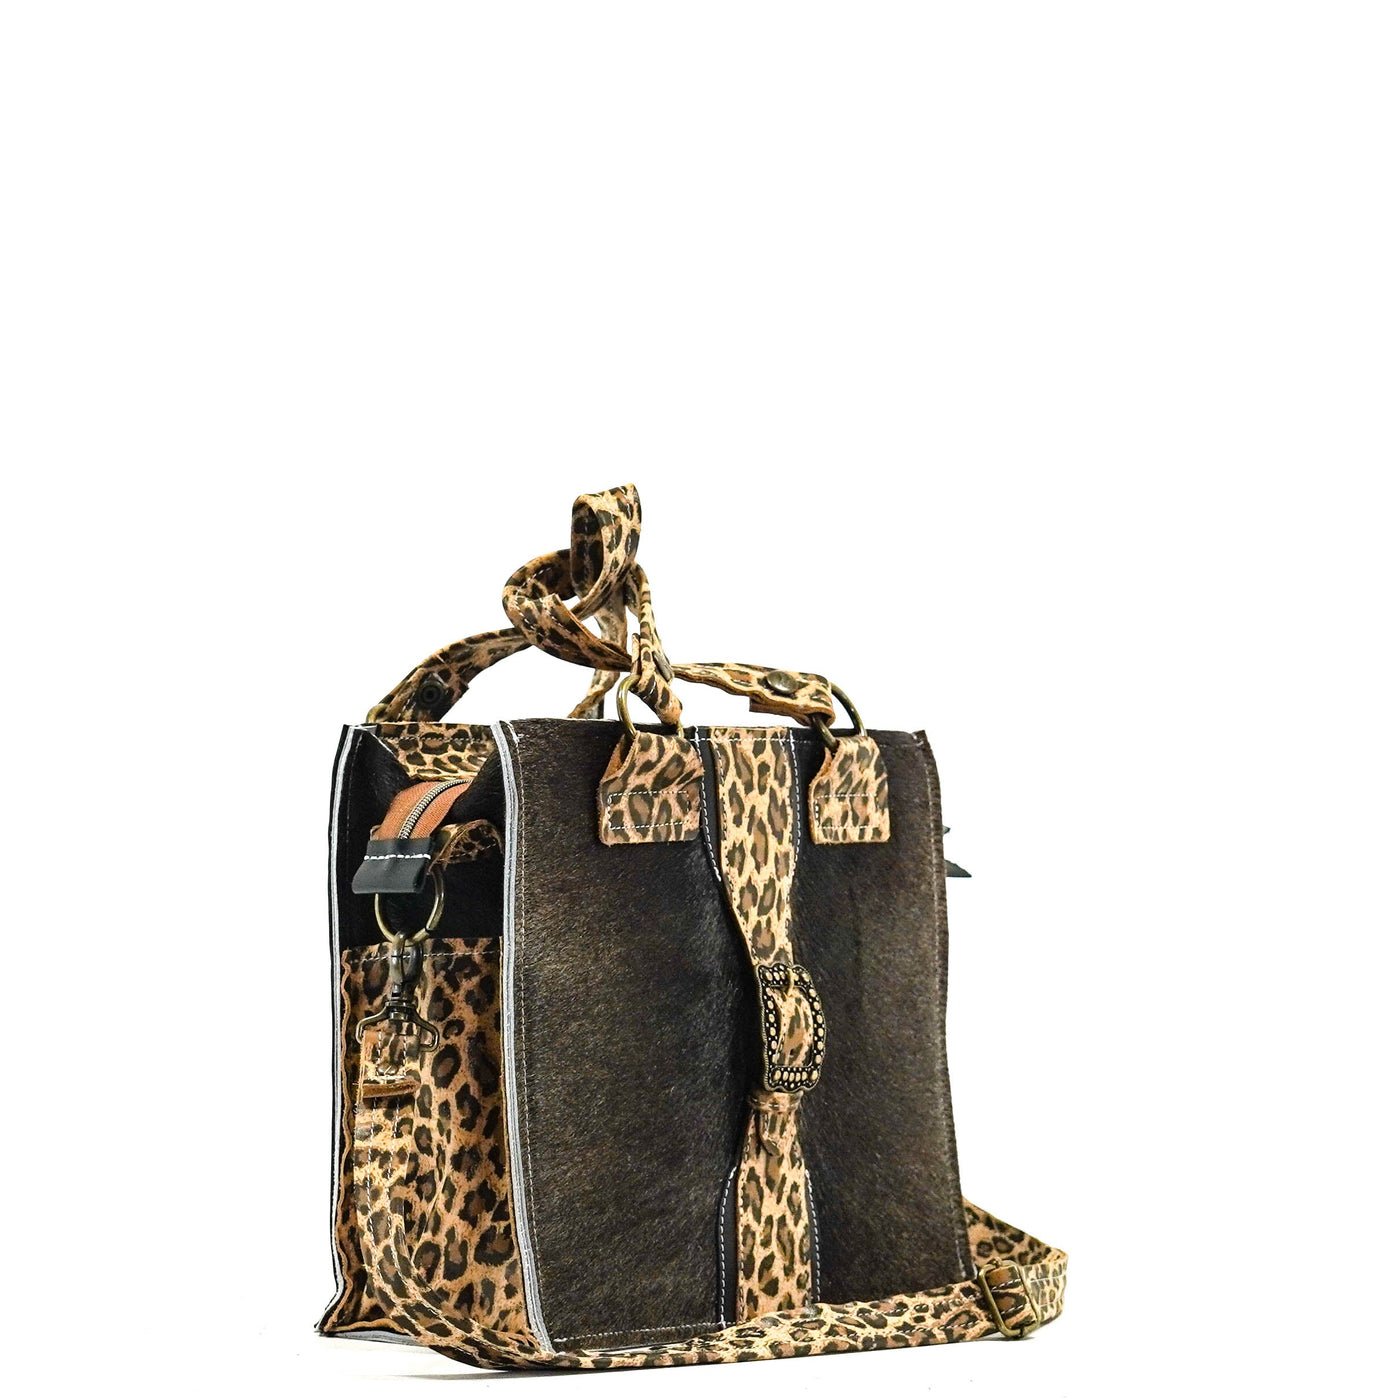 Minnie Pearl - Dark Brindle w/ Leopard Leather-Shania-Western-Cowhide-Bags-Handmade-Products-Gifts-Dancing Cactus Designs